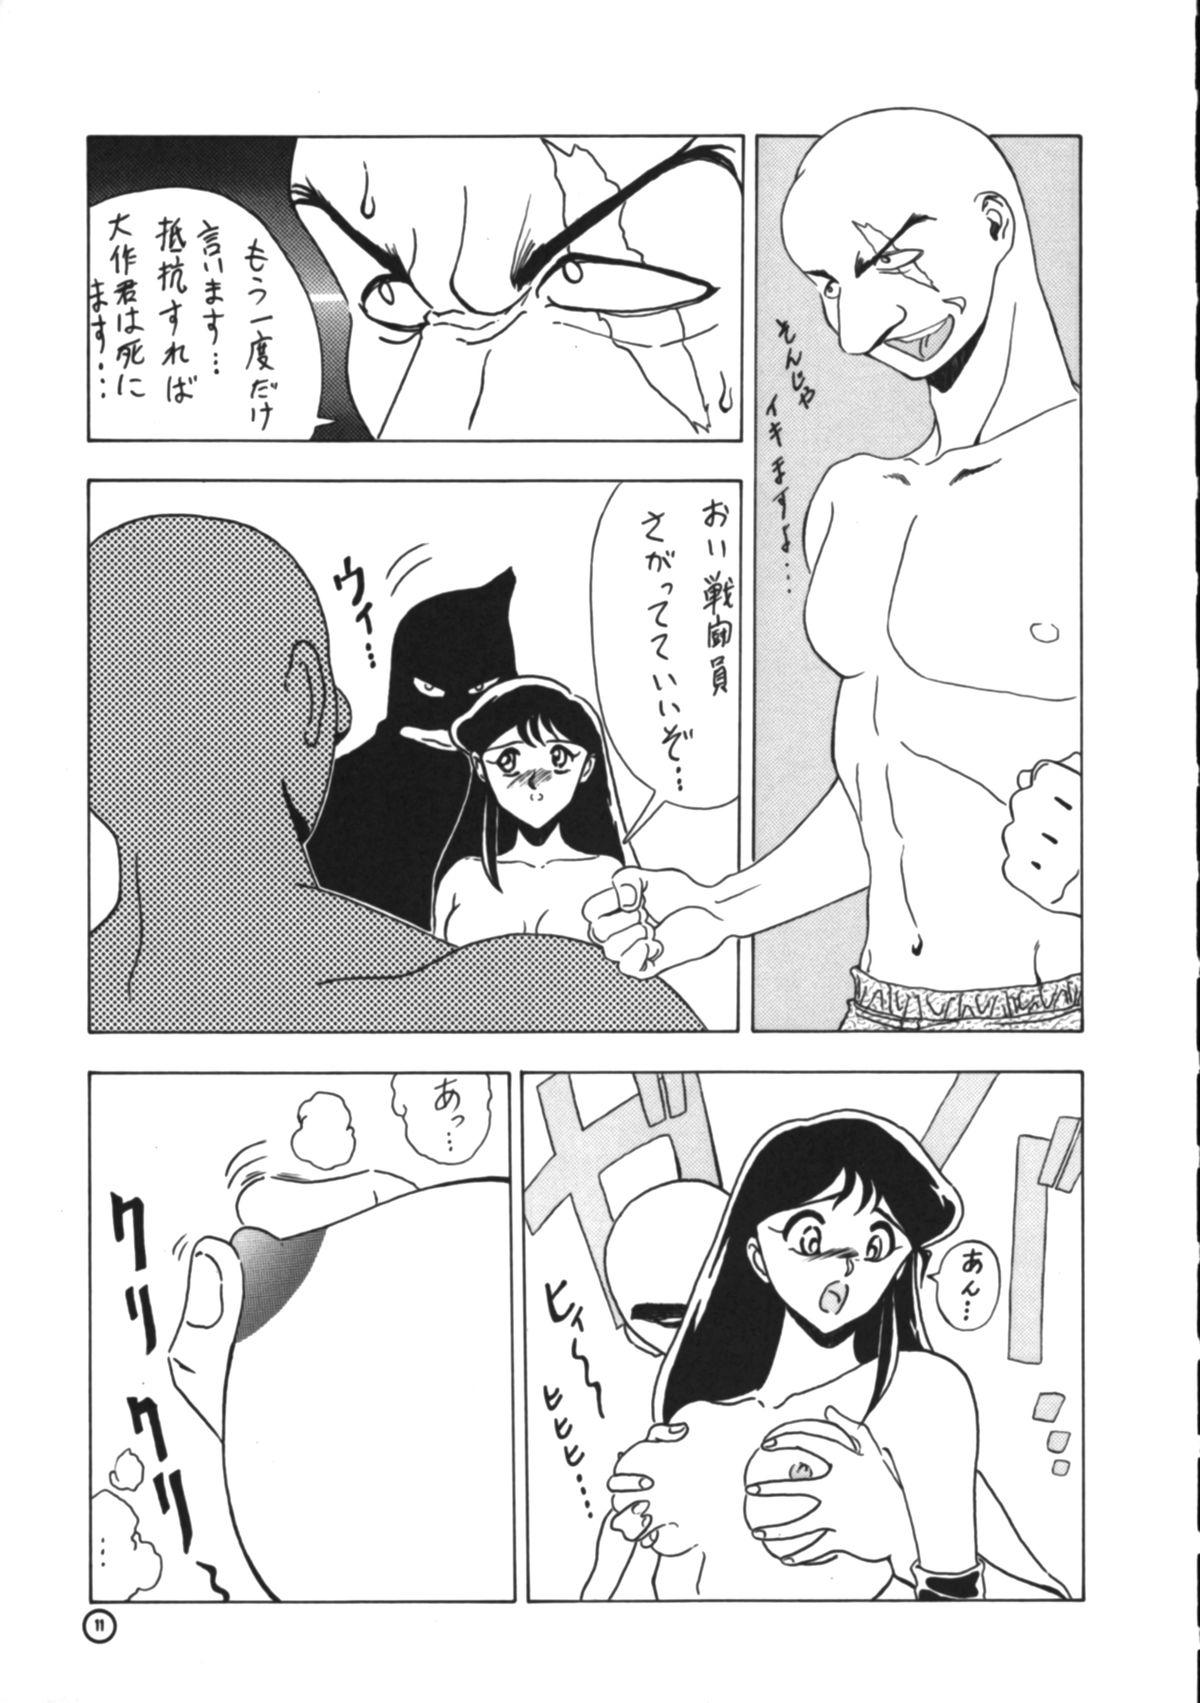 Blowjob Dendoushiki Shudou - Giant robo Monstercock - Page 10